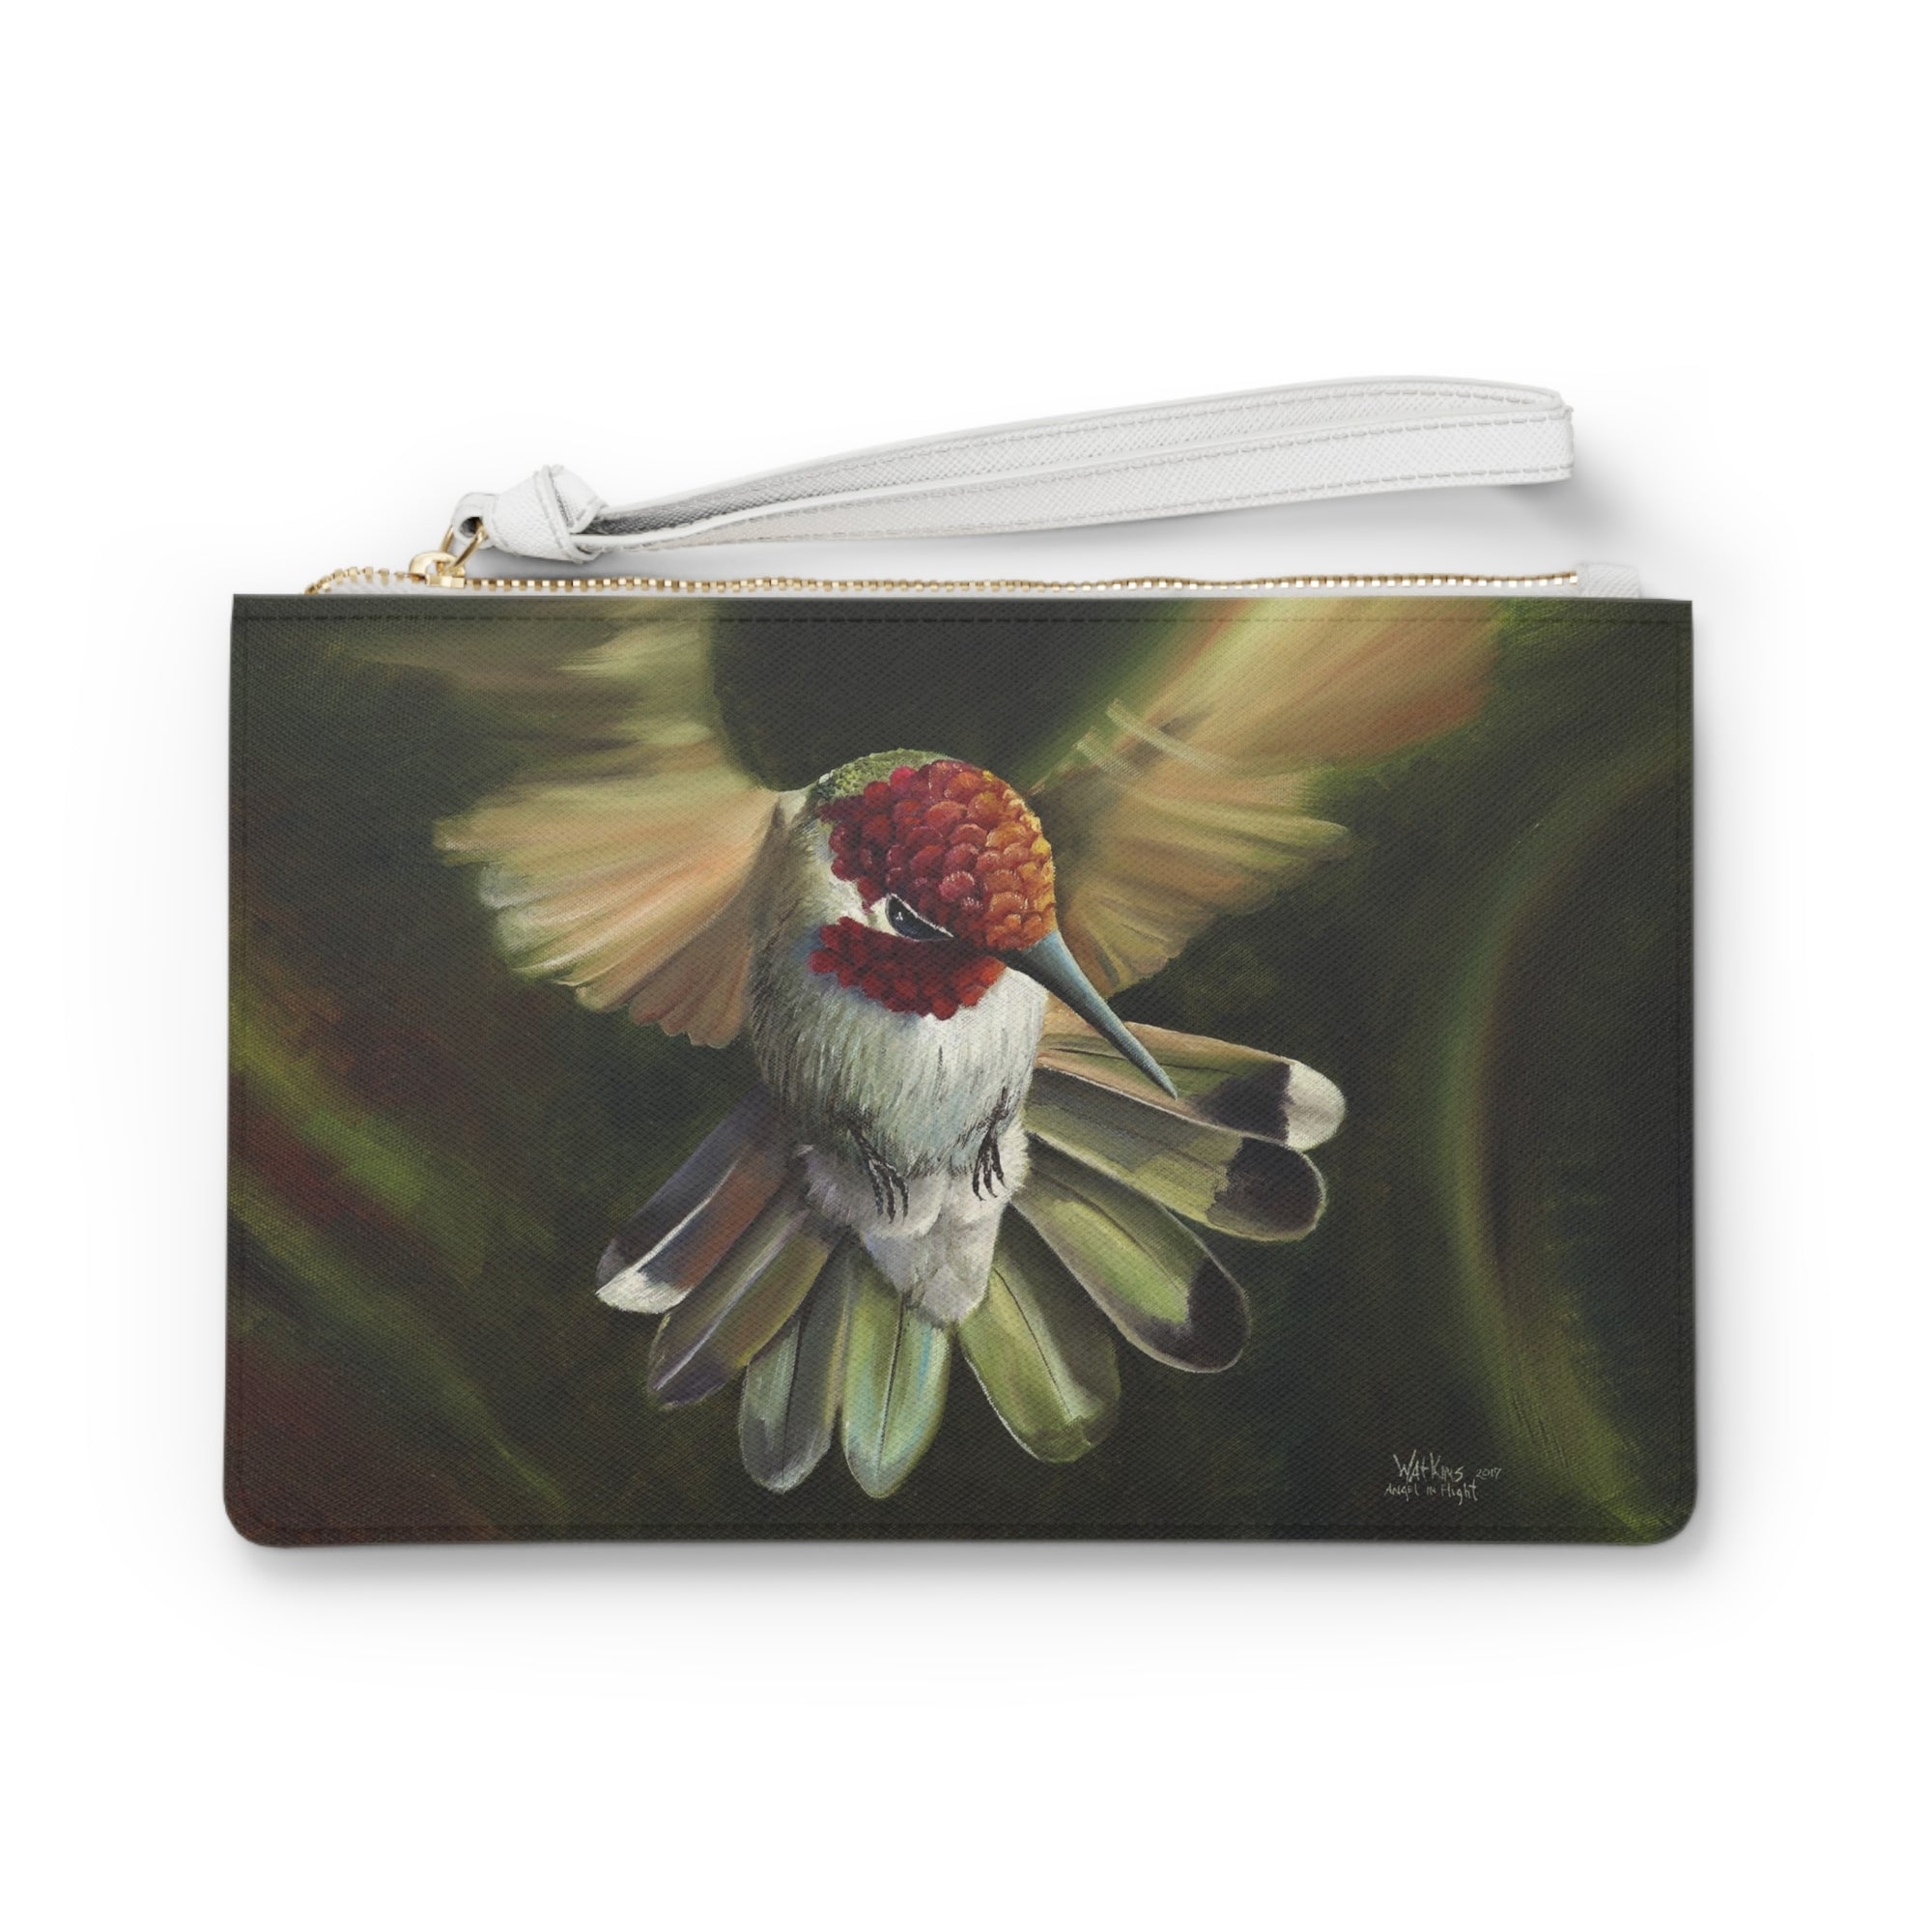 Angel in Flight Hummigbird Clutch Bag